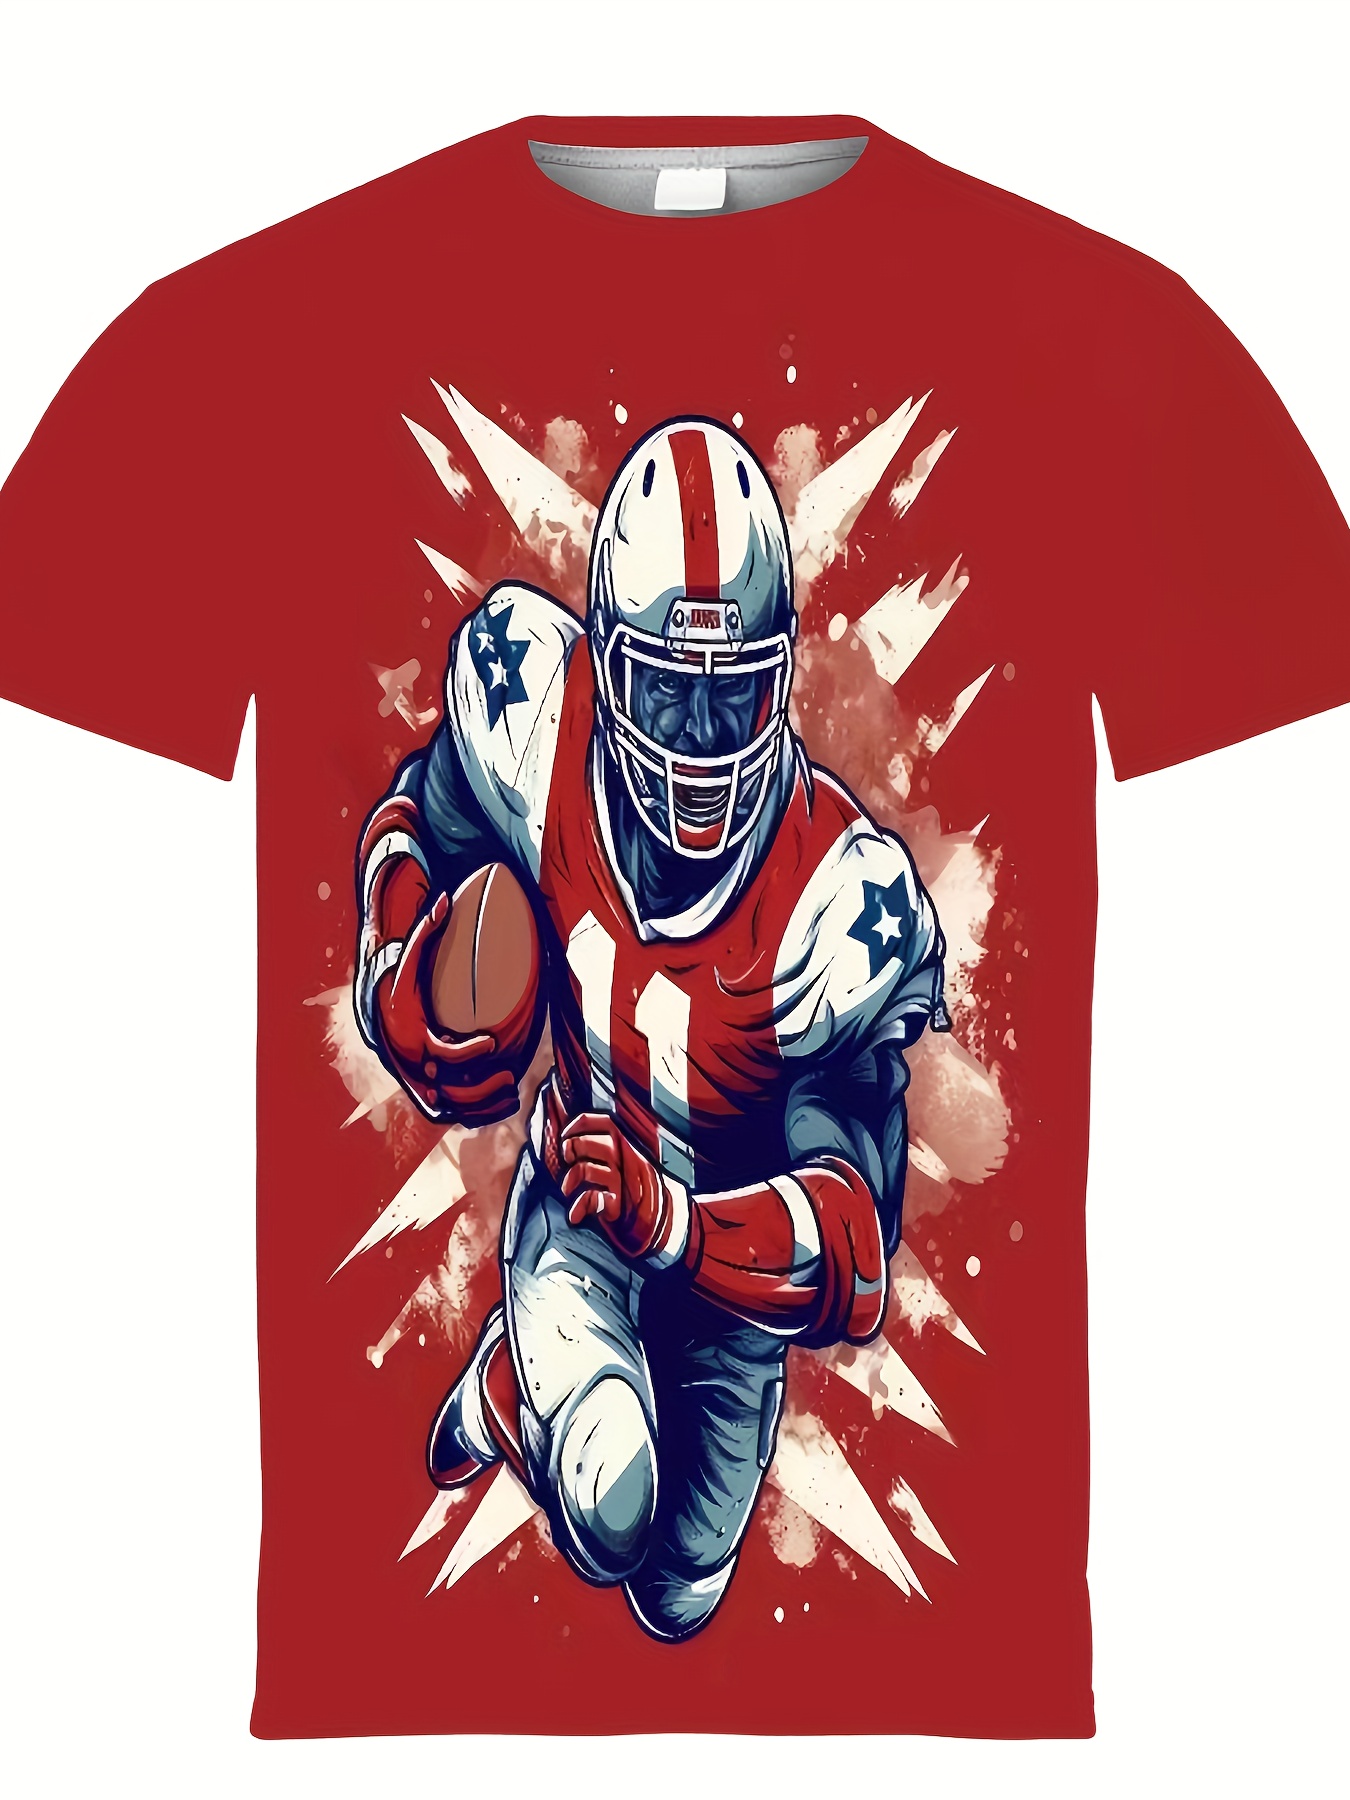 Plus Size Mens T Shirt Burning American Football Graphic Print T